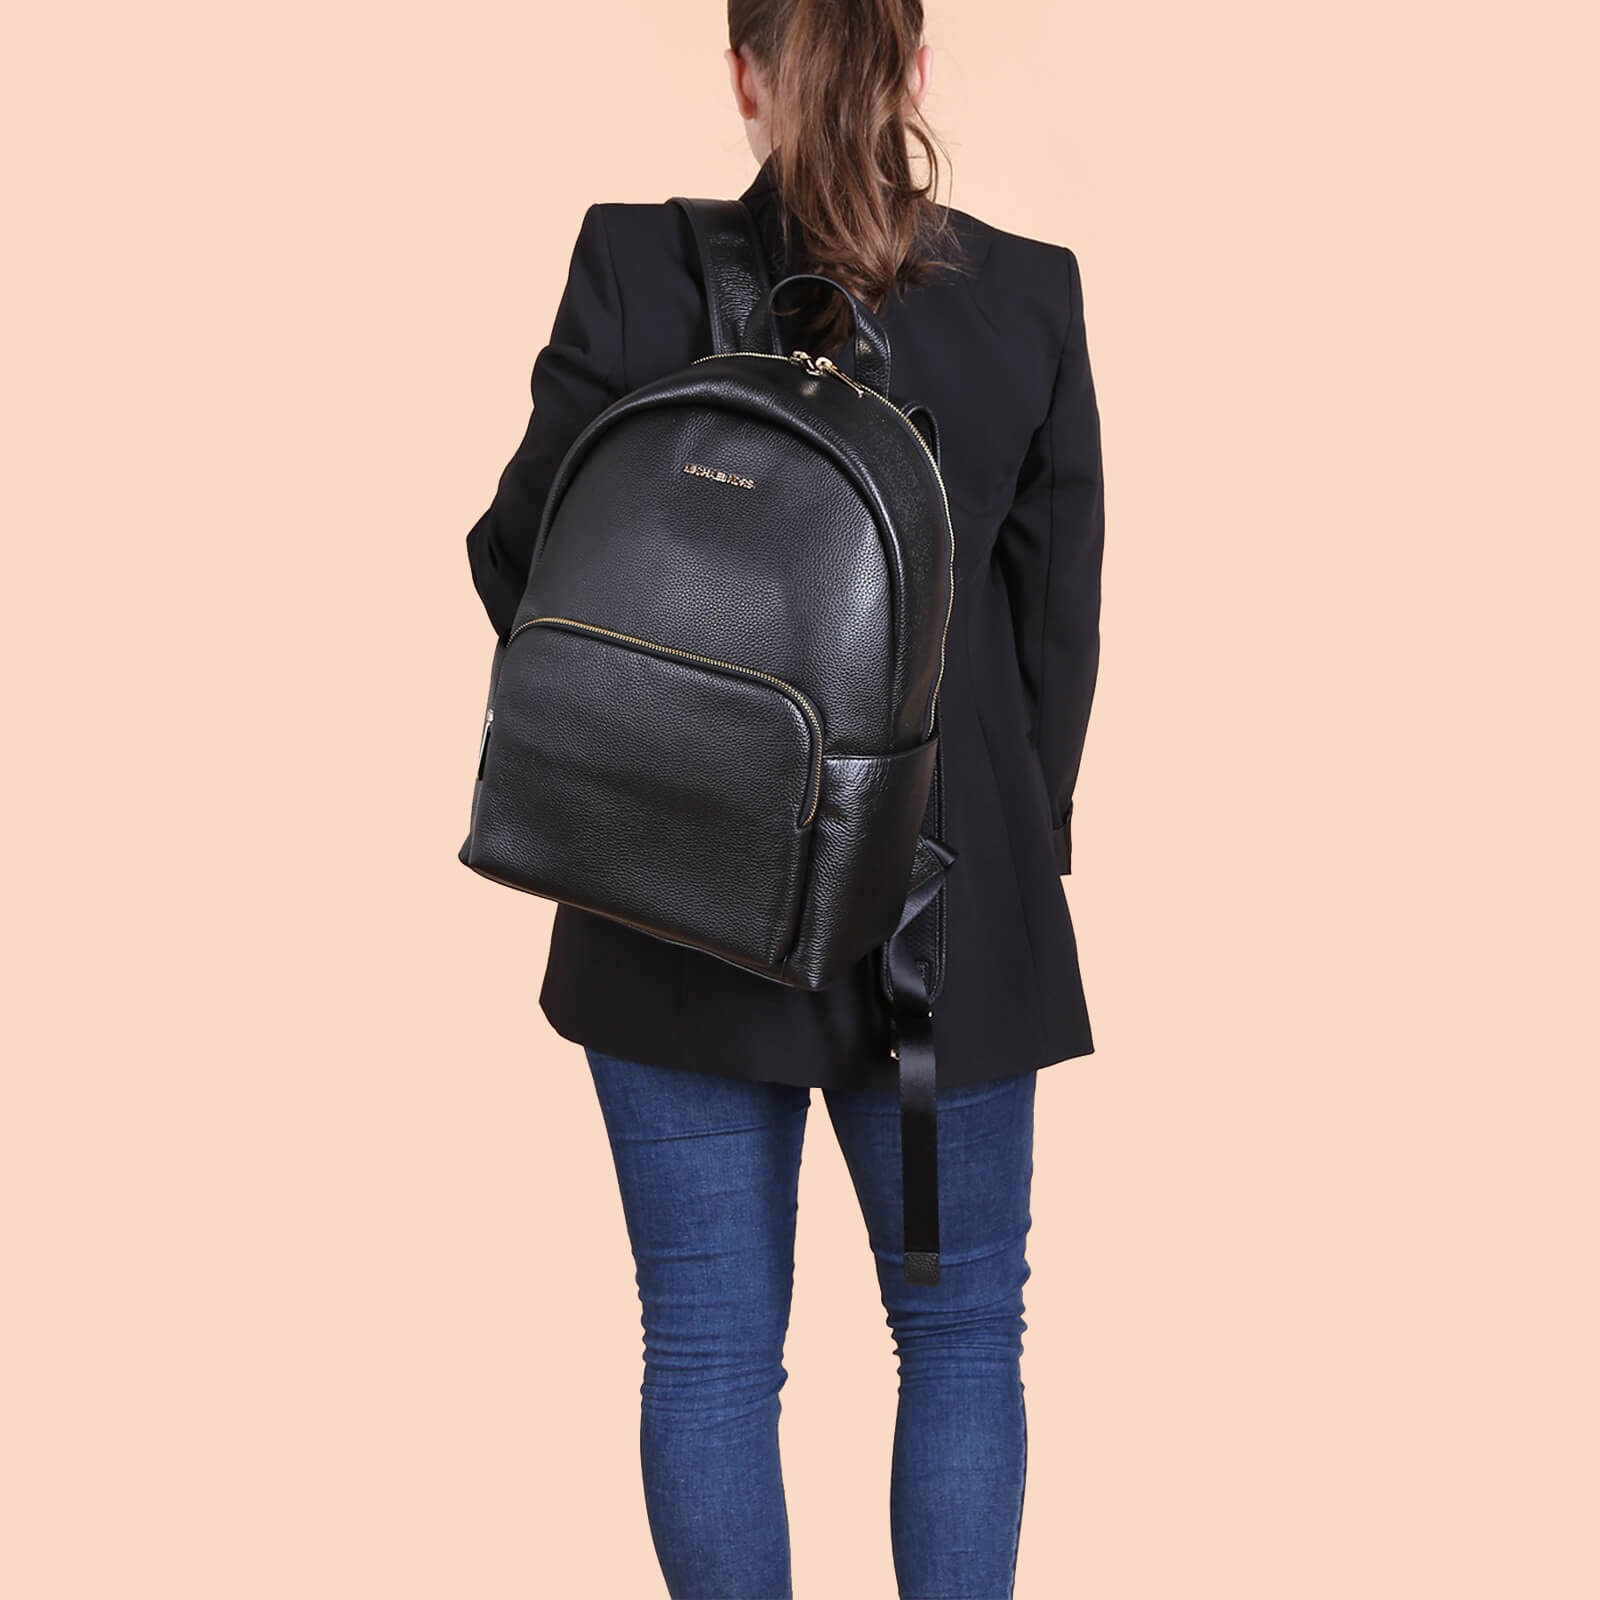 NWT black MICHAEL KORS Erin Large leather backpack